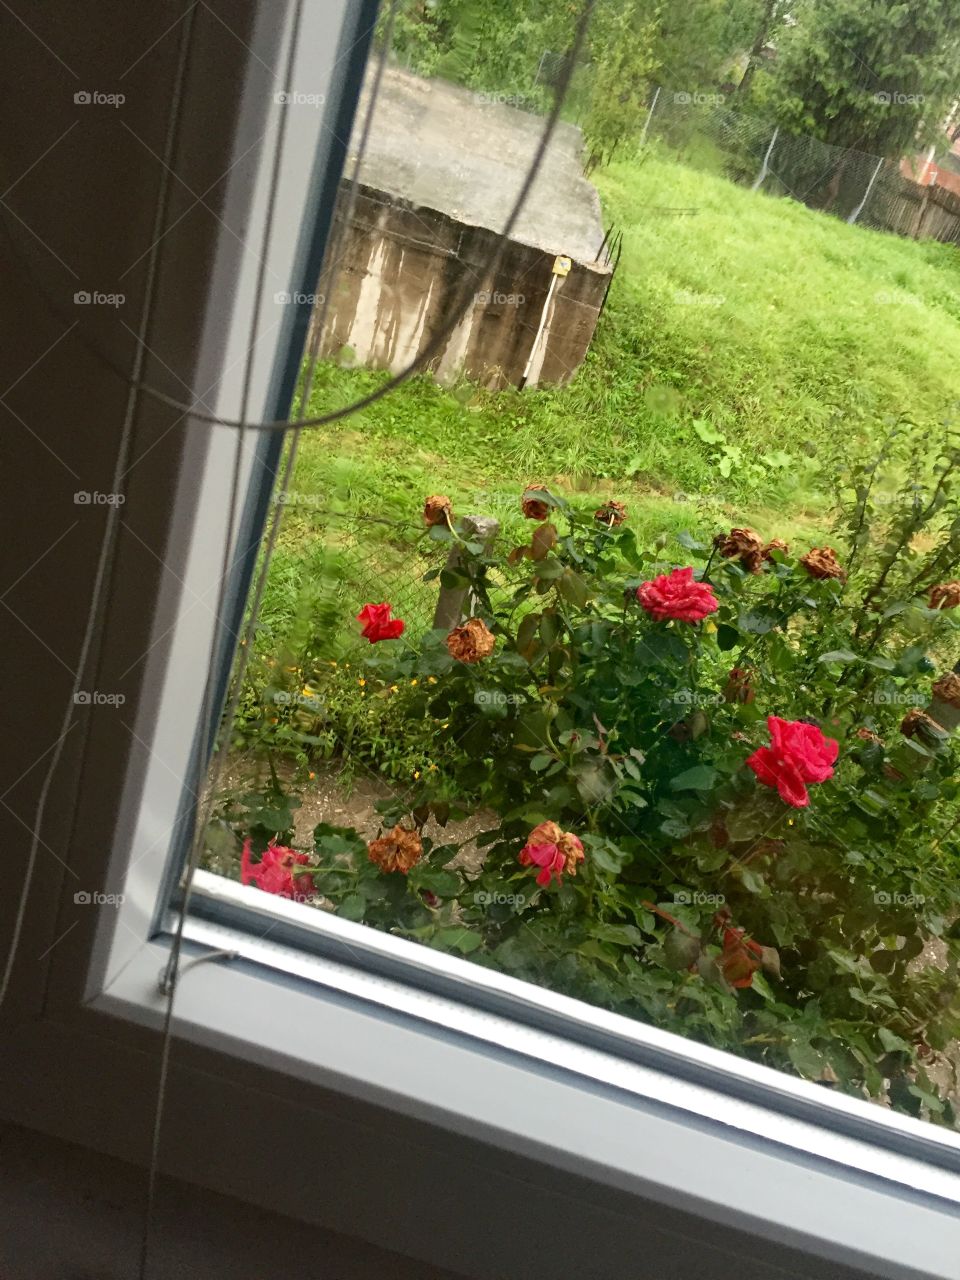 Rainy day through the window